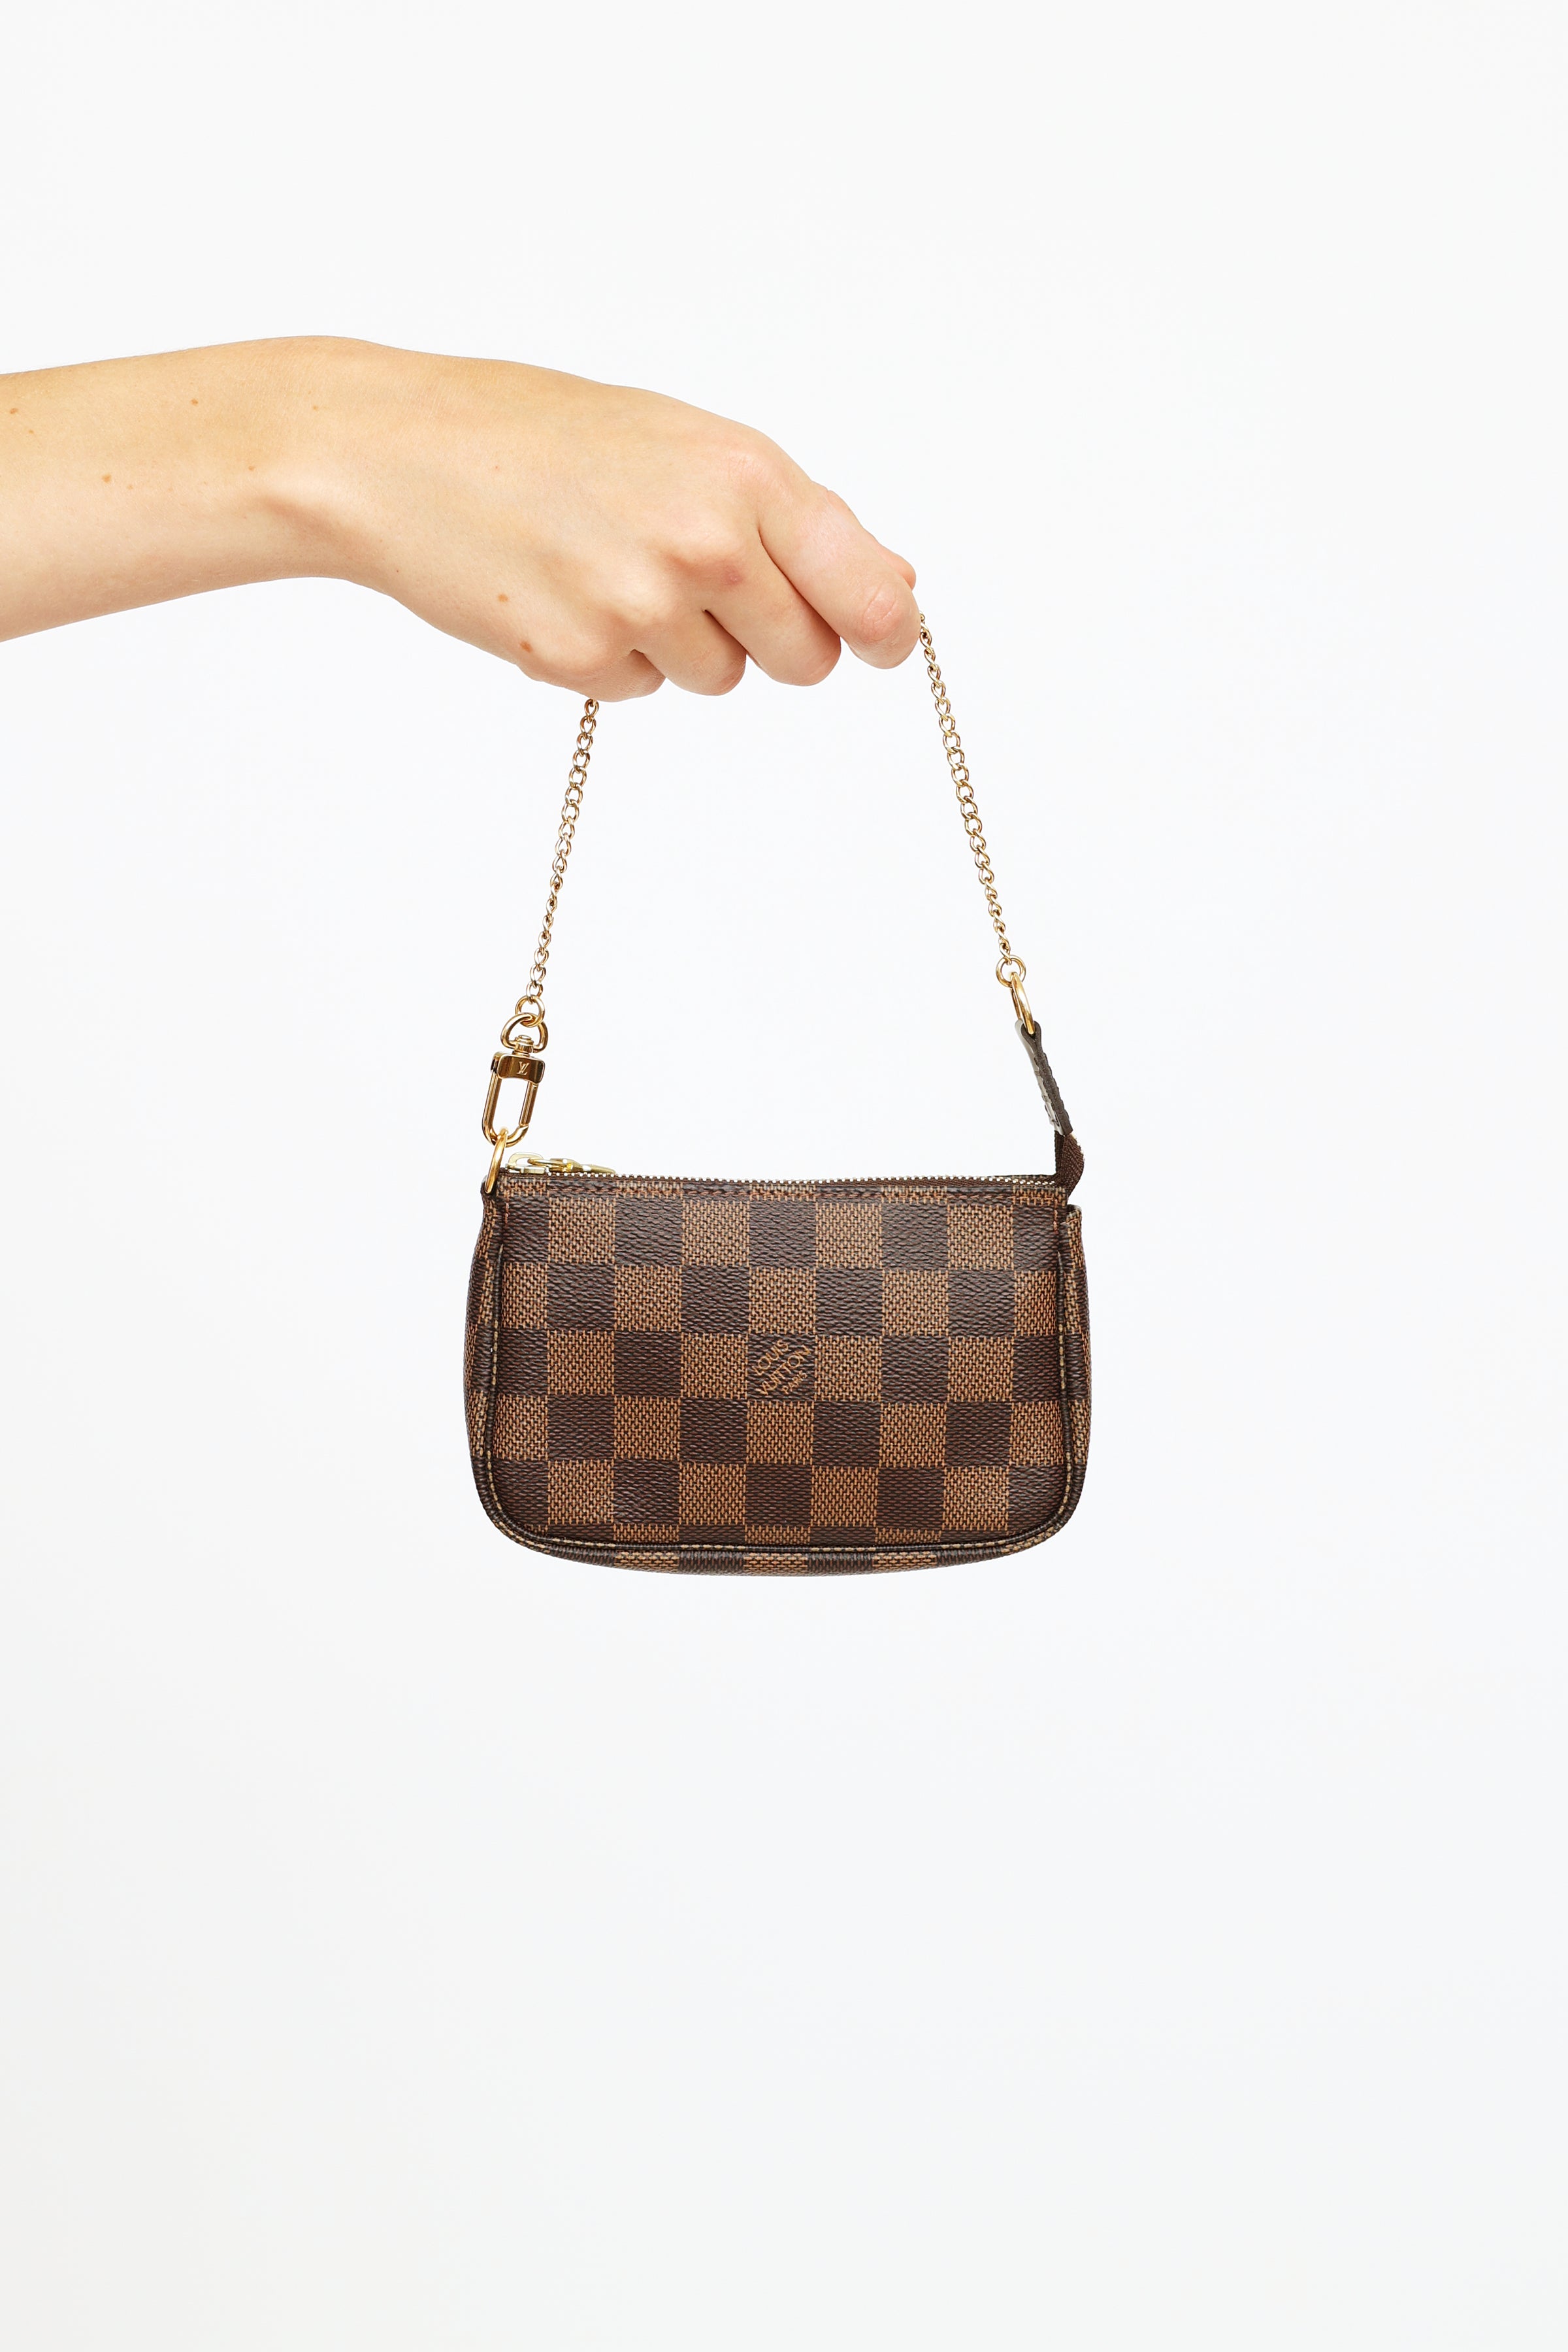 Louis Vuitton Mini Louis Vuitton Damier Ebene Handbags & Bags for